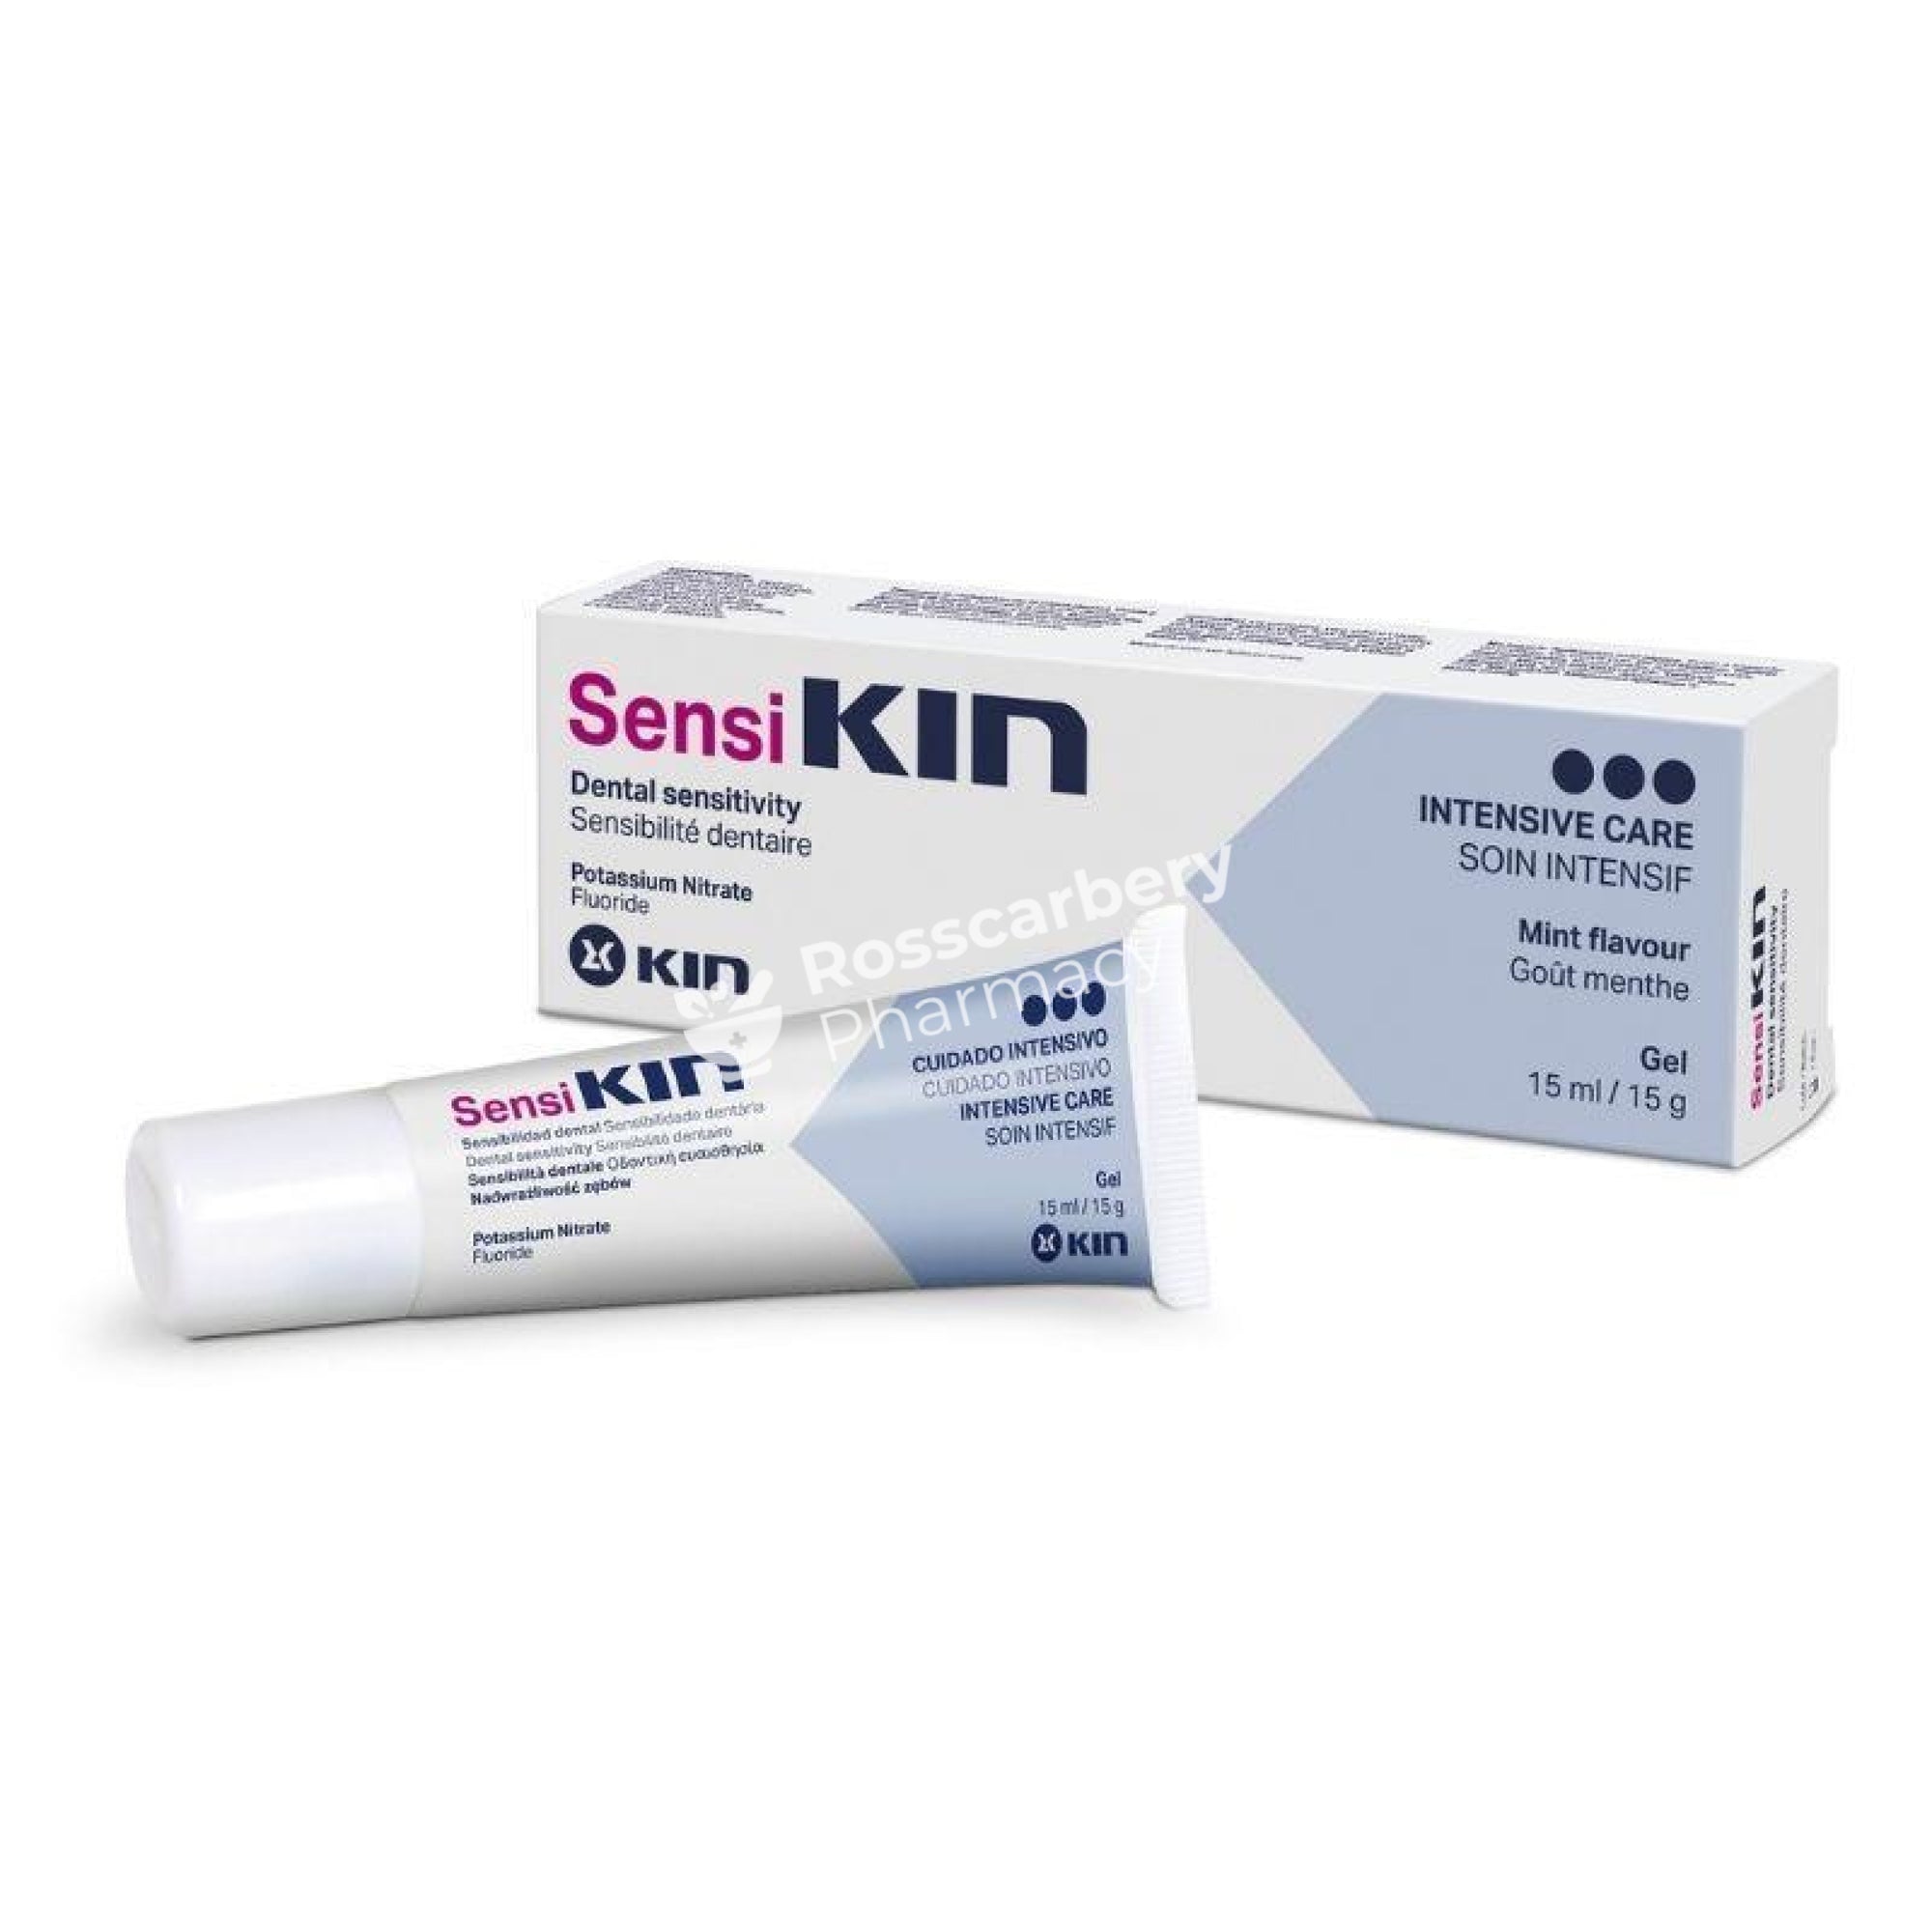 Kin Sensikin Dental Sensitivity Mint Flavour Gel Oral Care